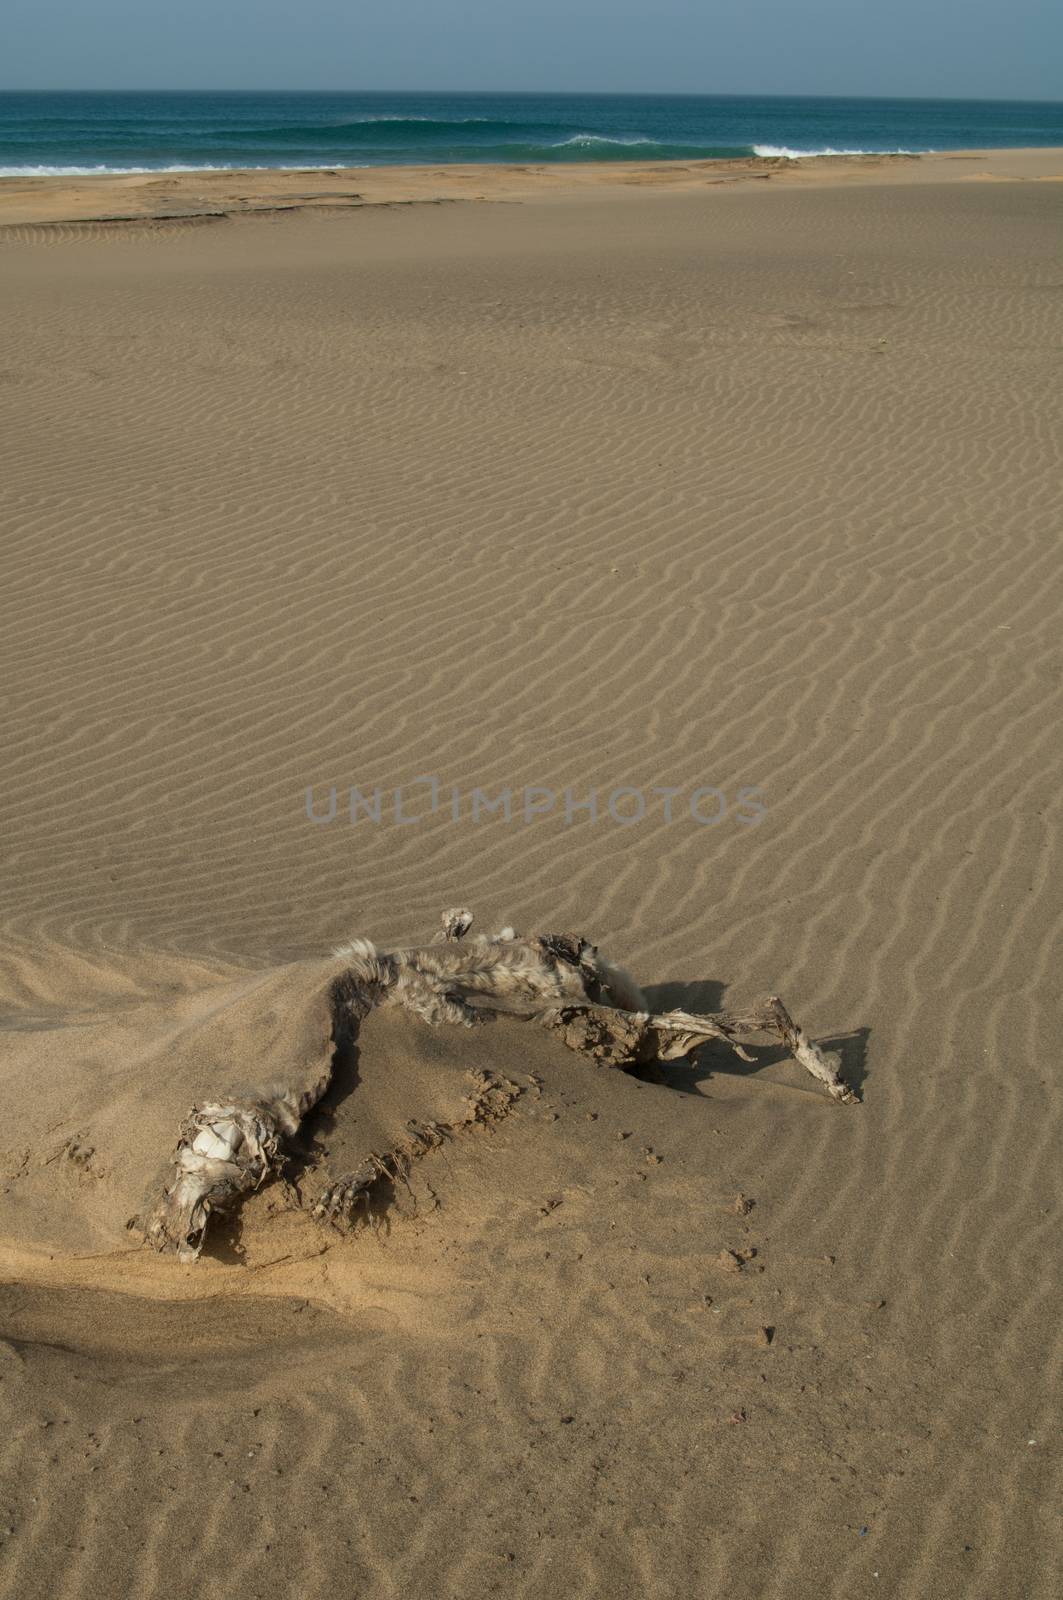 Skeleton of goat (Capra aegagrus hircus) in the sand. by VictorSuarez